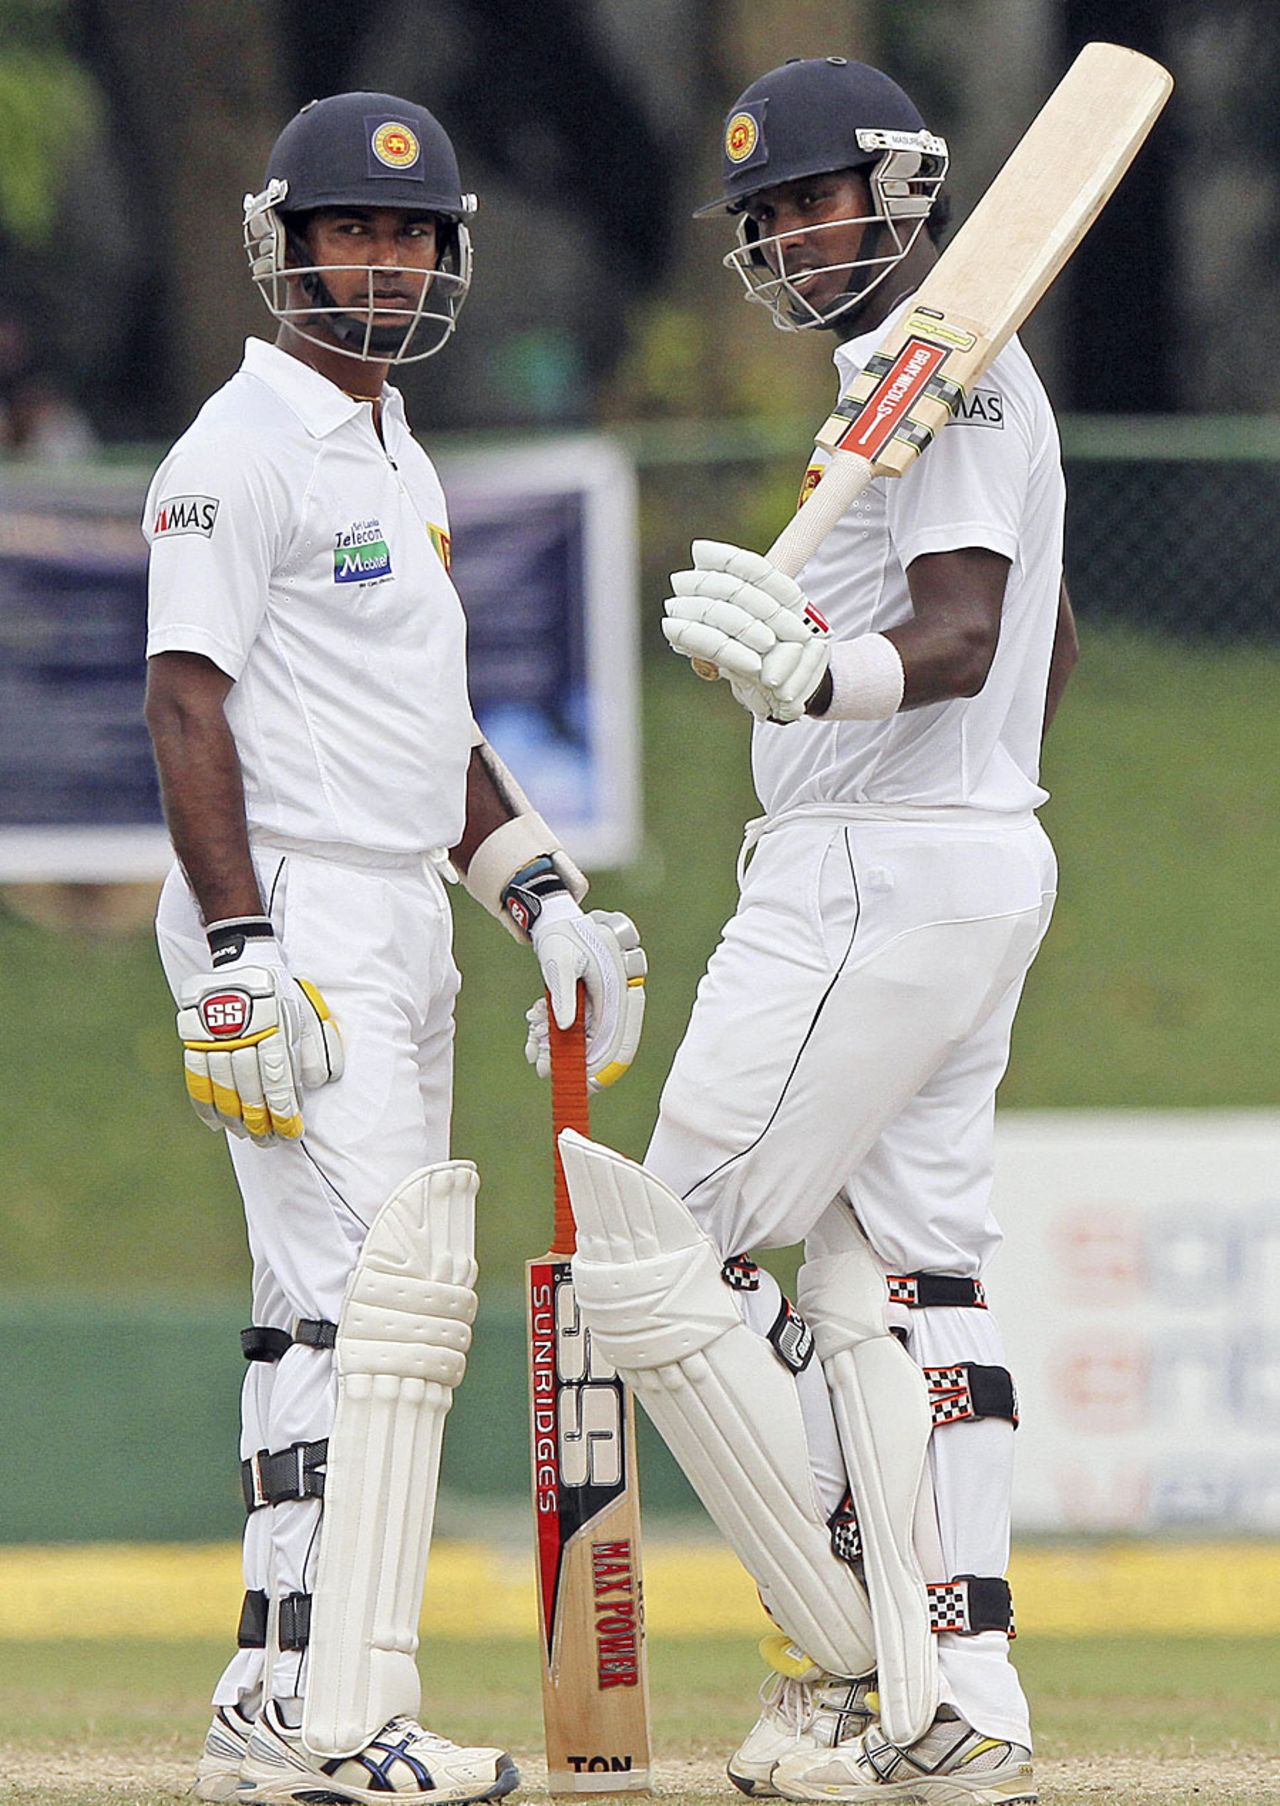 Angelo Mathews acknowledges his fifty as Nuwan Kulasekara looks on, Sri Lanka v New Zealand, 2nd Test, Colombo, 5th day, November 29, 2012